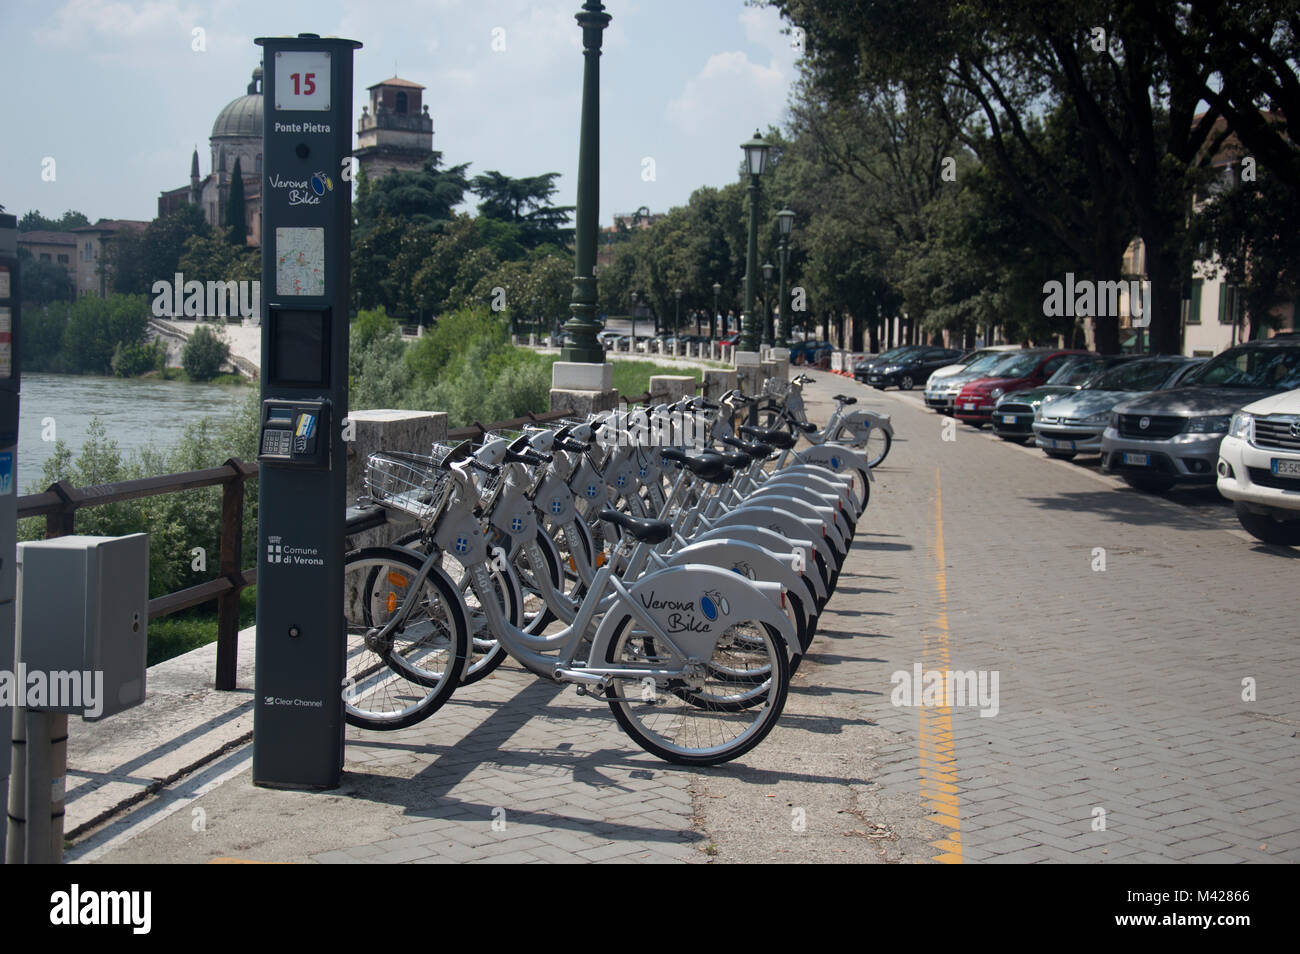 A row of cycles at a Verona Bike station, Verona Italy. Stock Photo